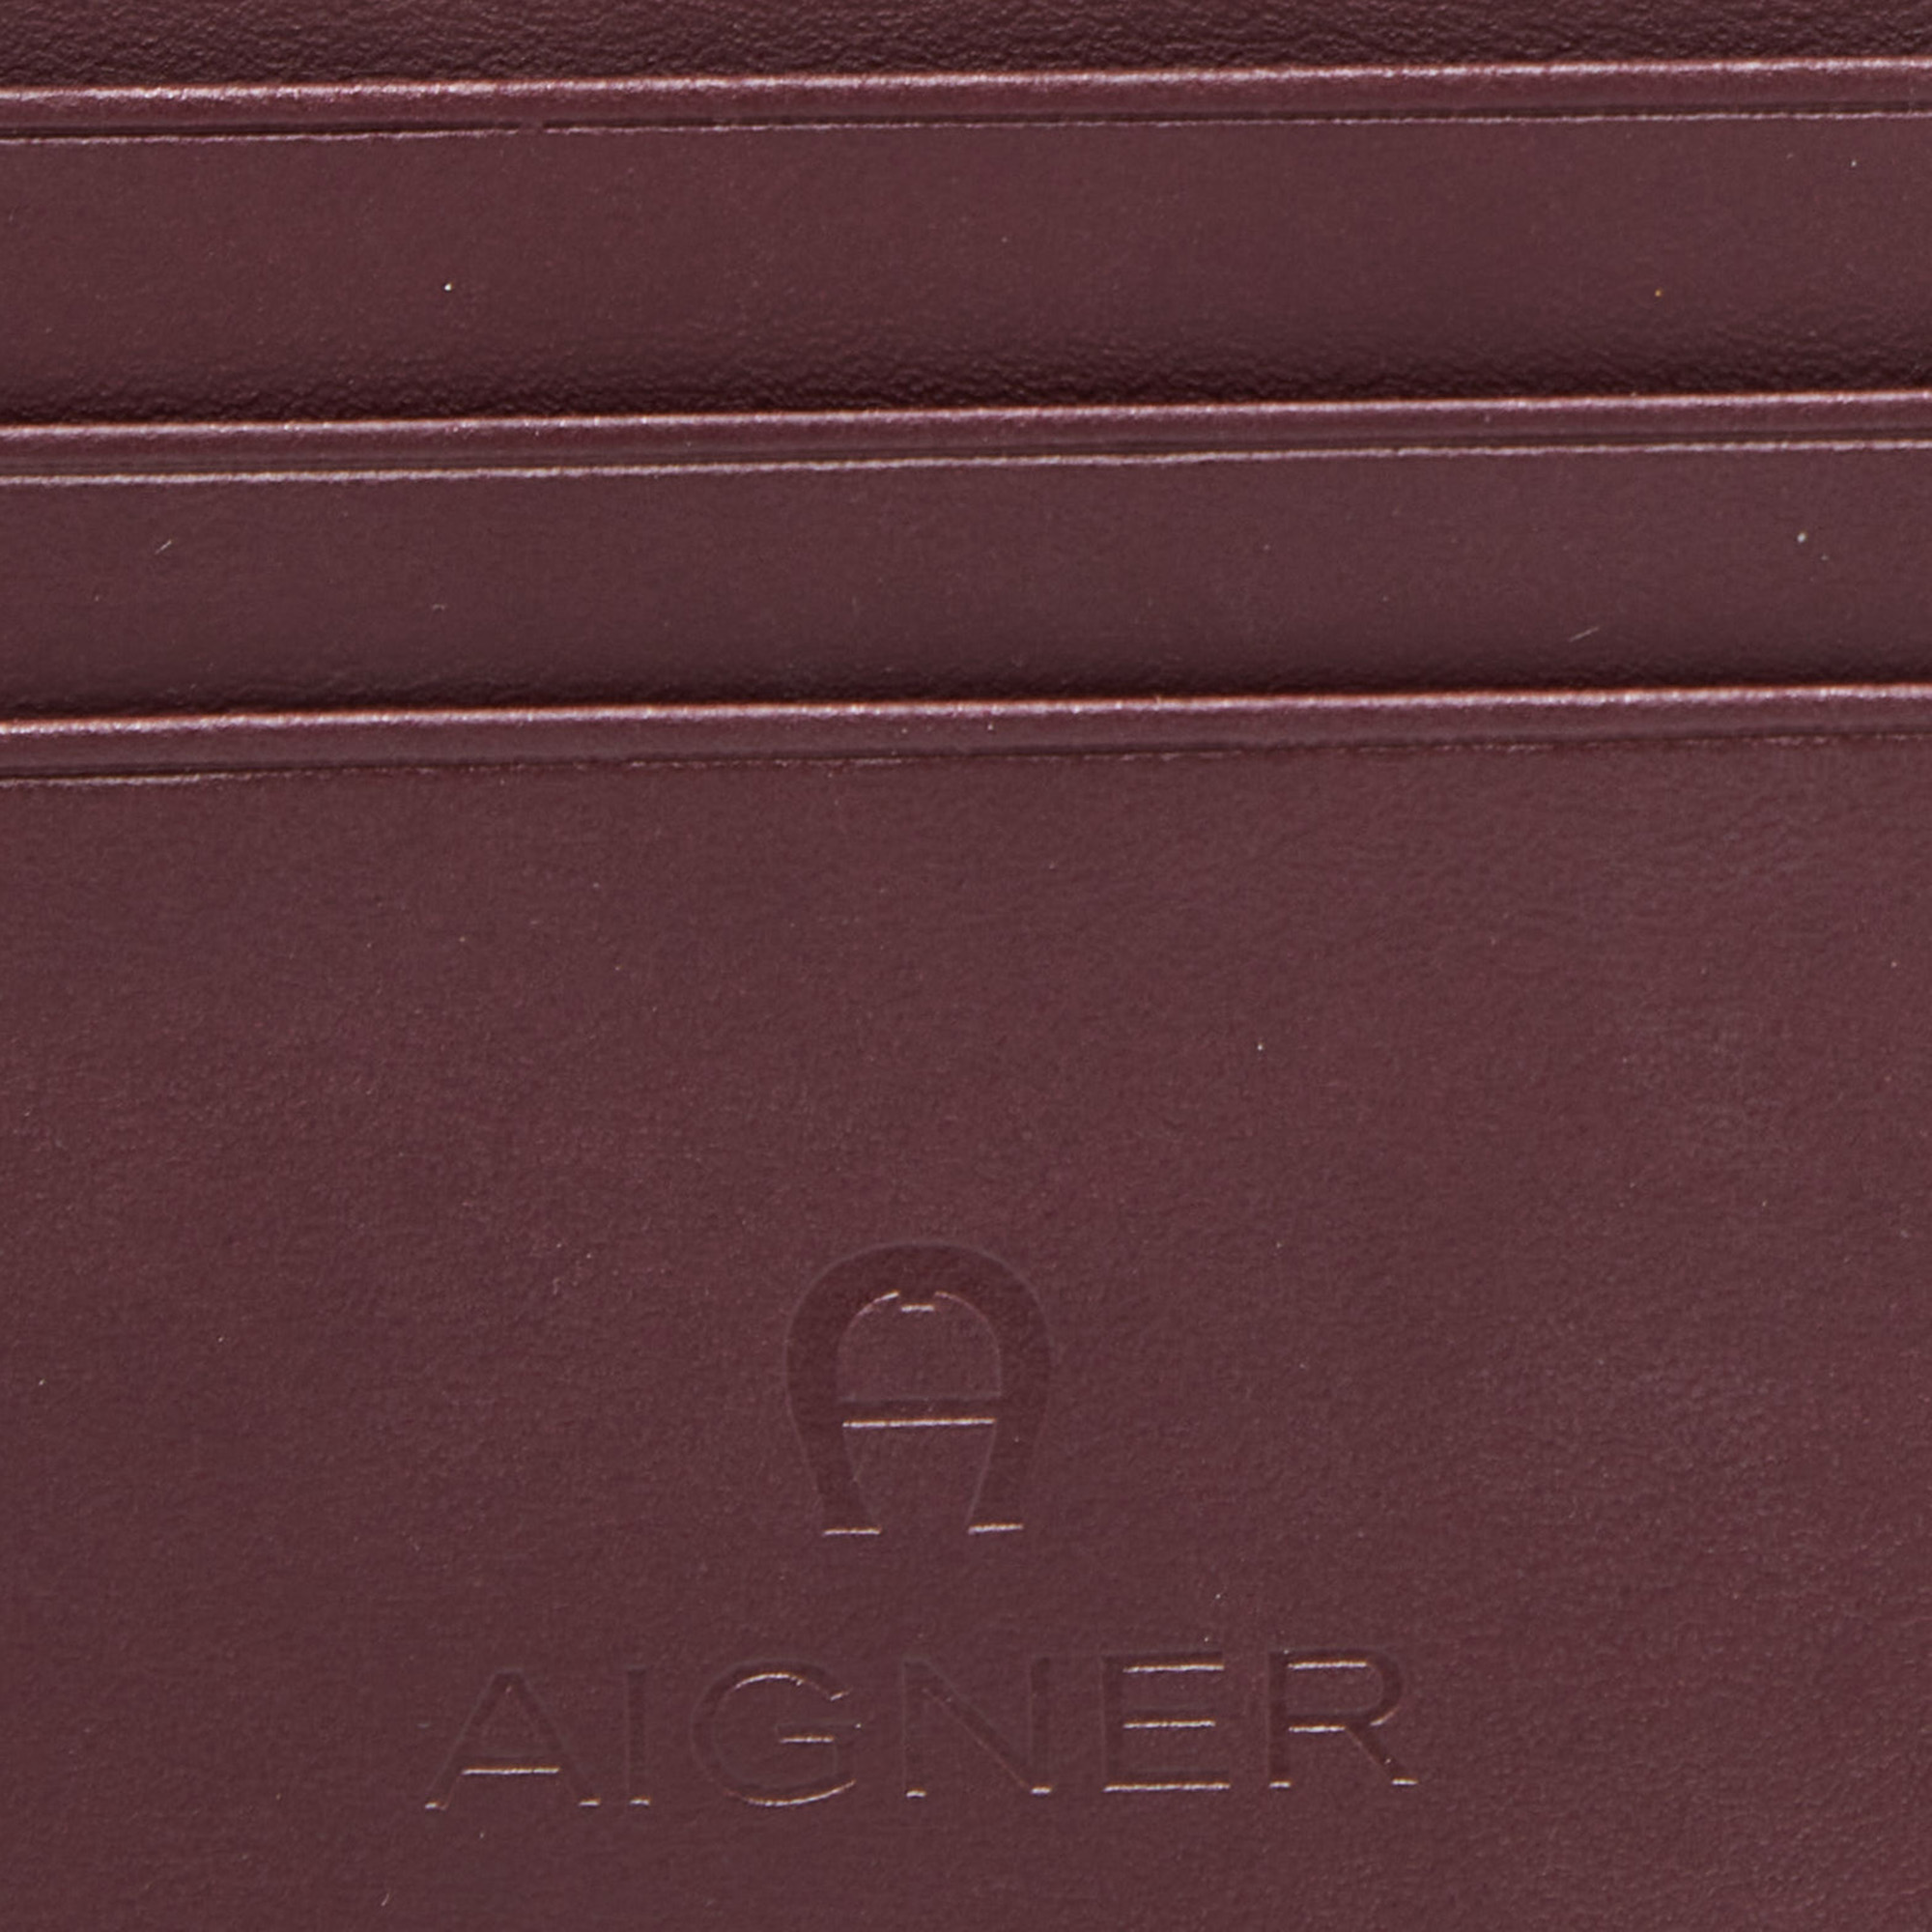 Aigner Burgundy Leather Card Holder